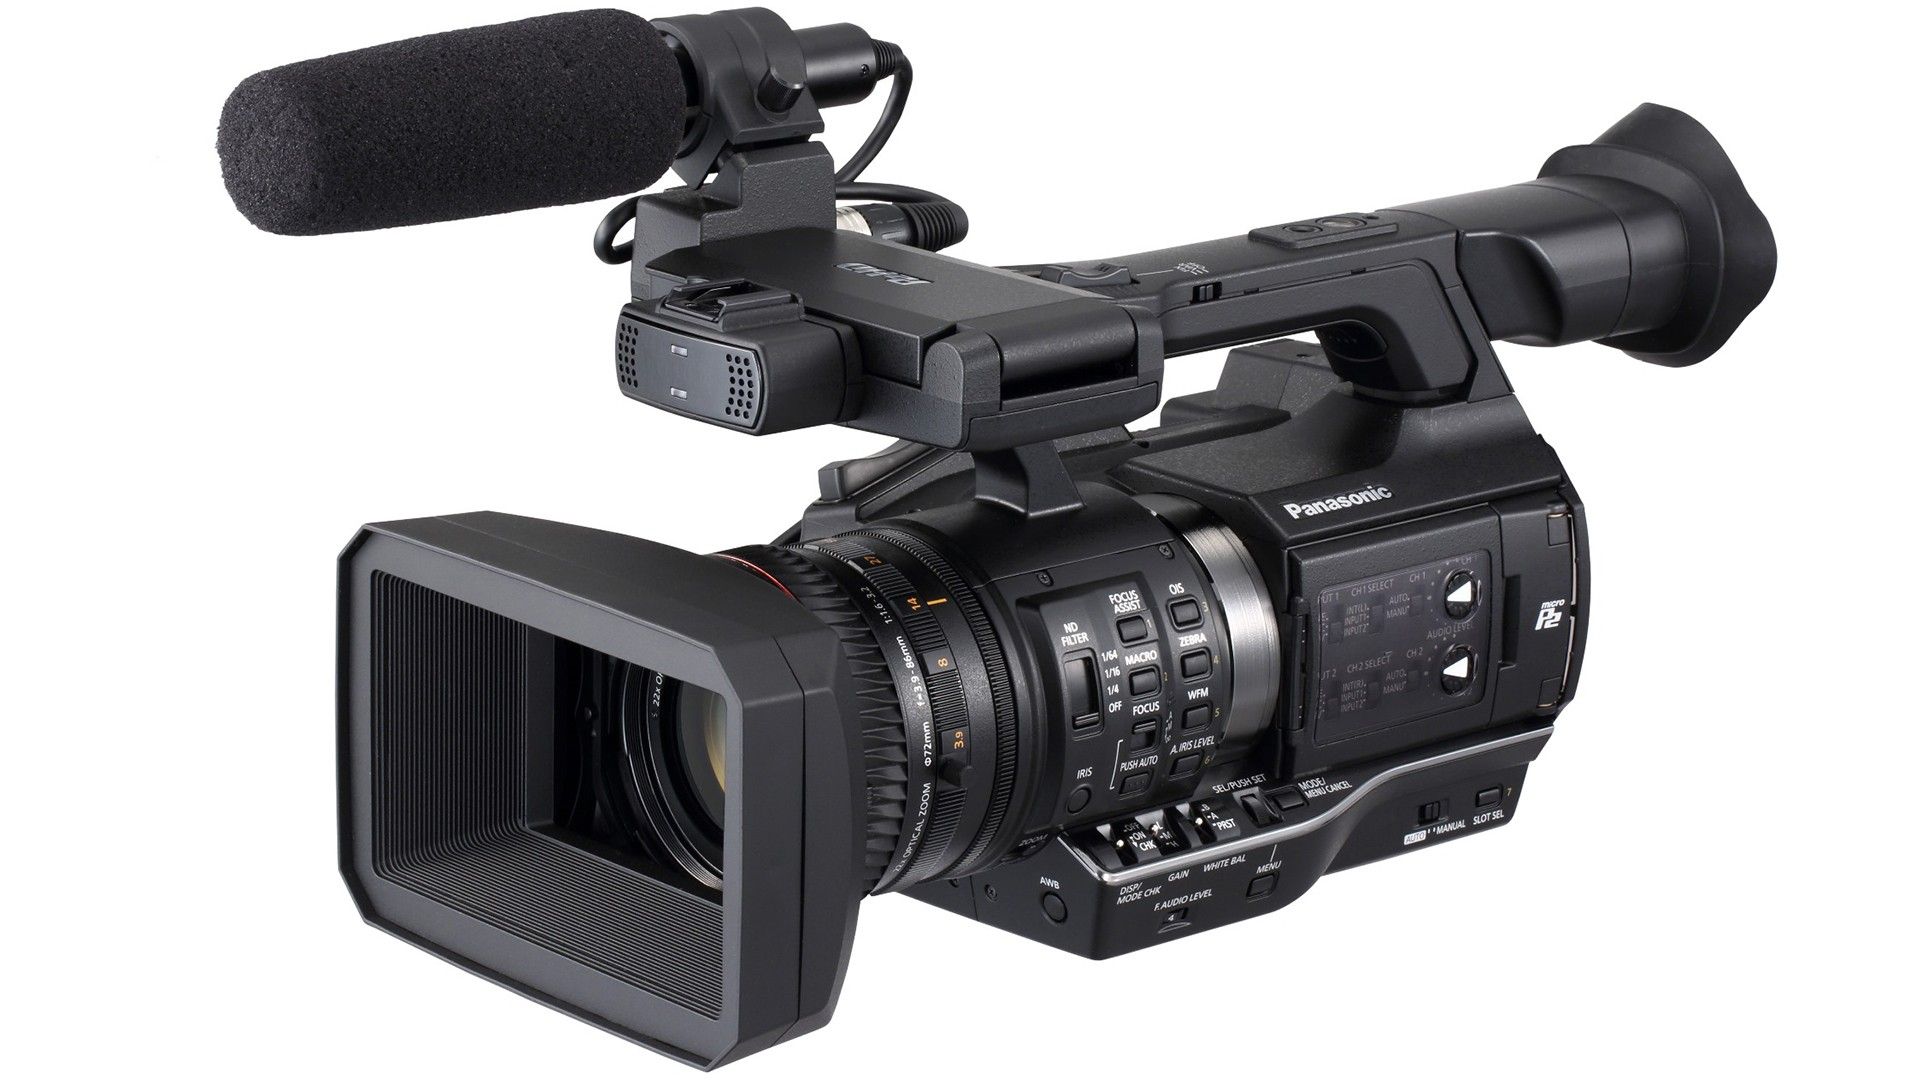 AJ-PX230 is Panasonic's Newest 1080p Handheld ENG Camera